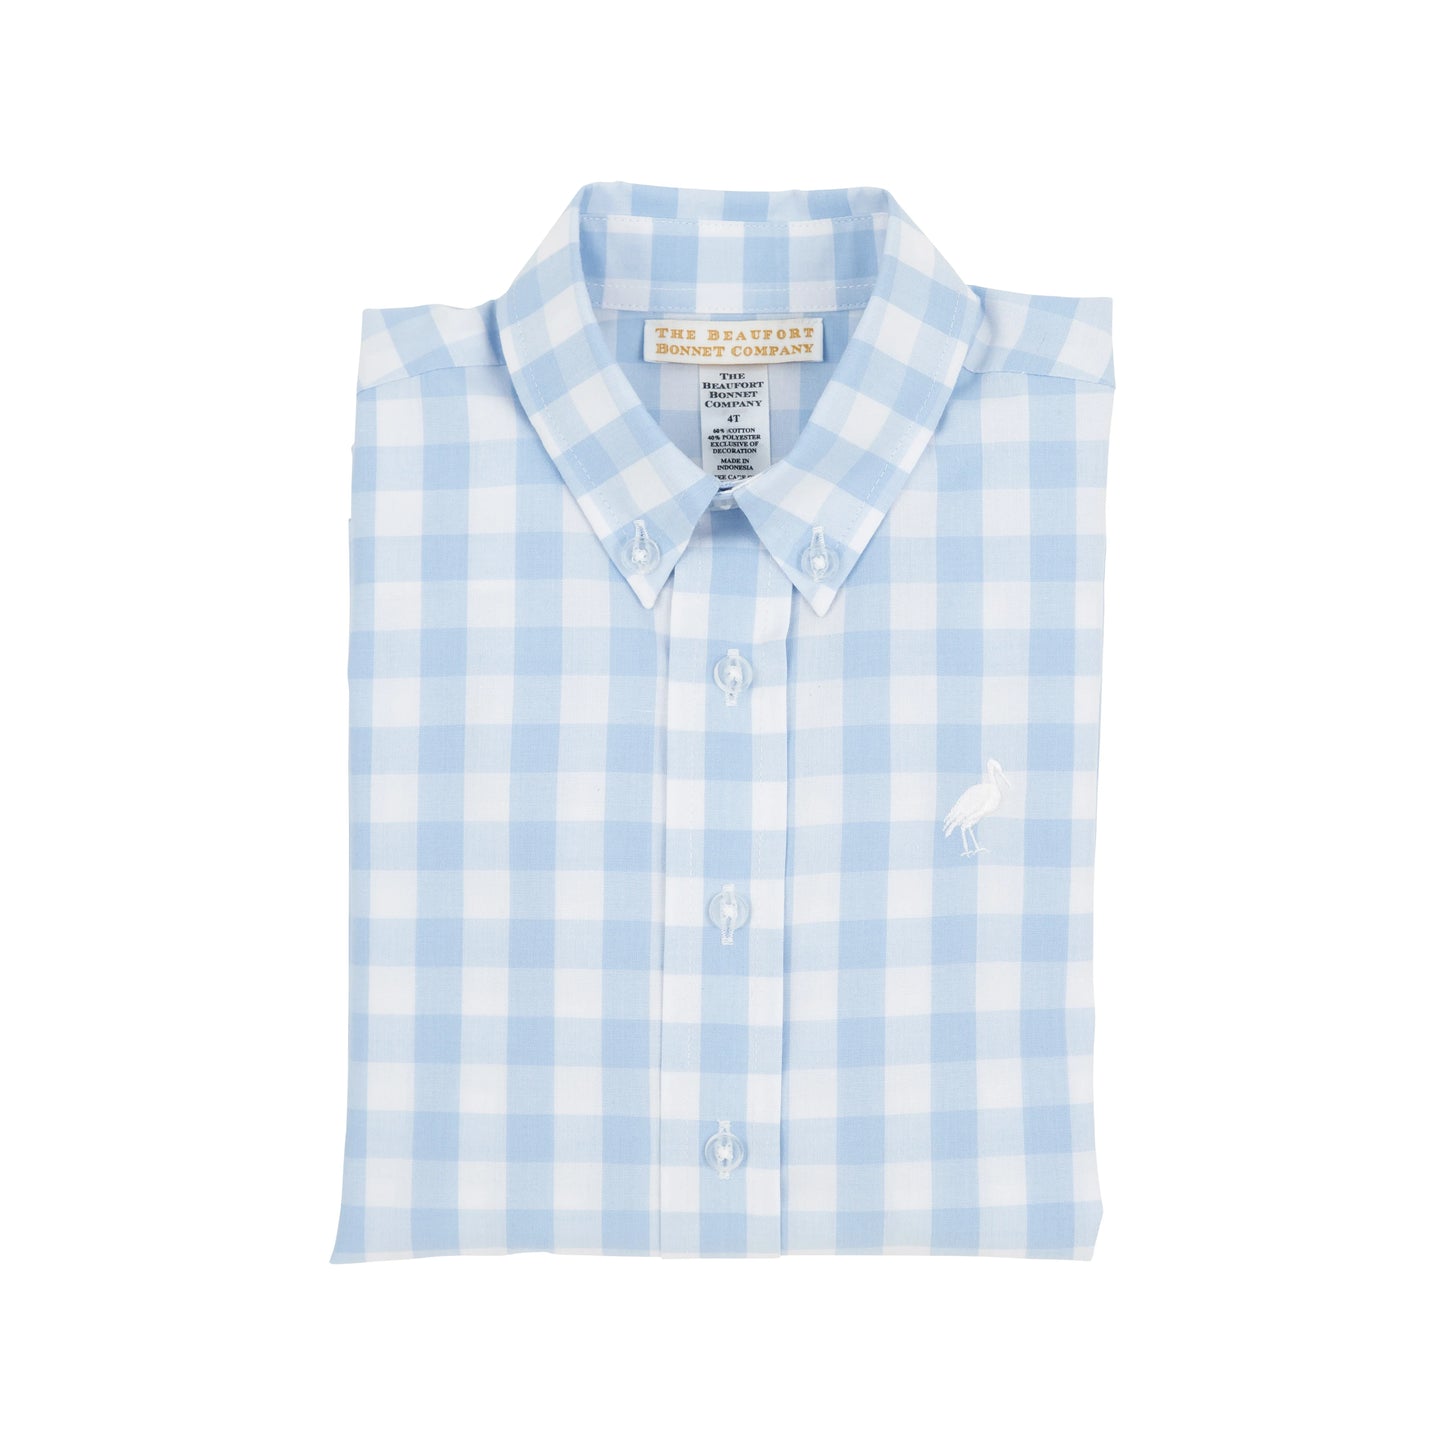 Dean's List Dress Shirt - Beale Street Blue Check with Worth Avenue White